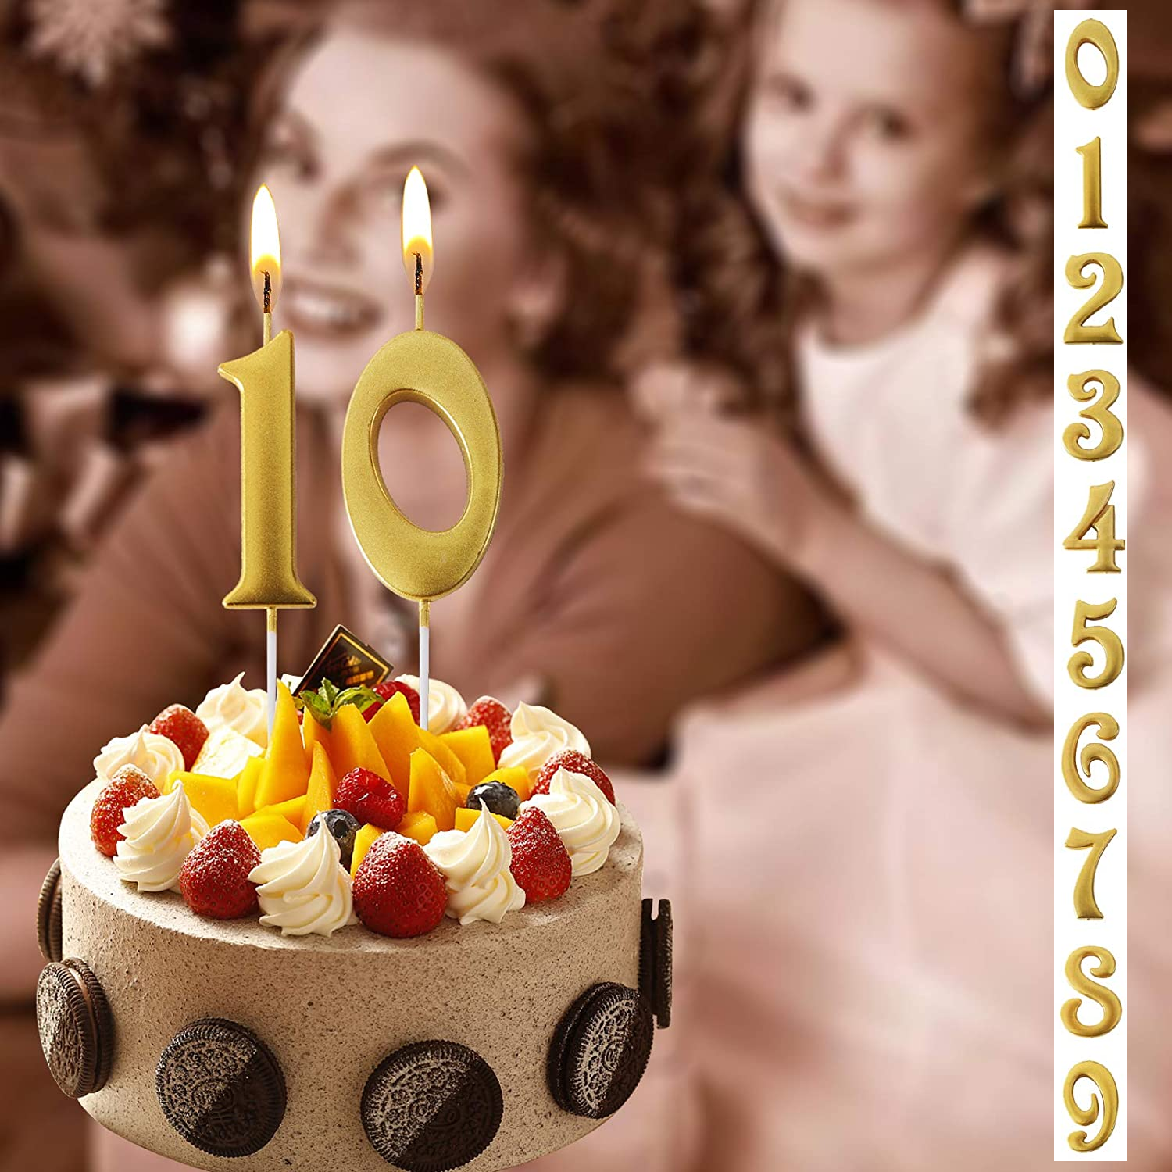 Cake/Cupcake Candle - 'Ornate' gold candle - #9 - Rampant Coffee Company